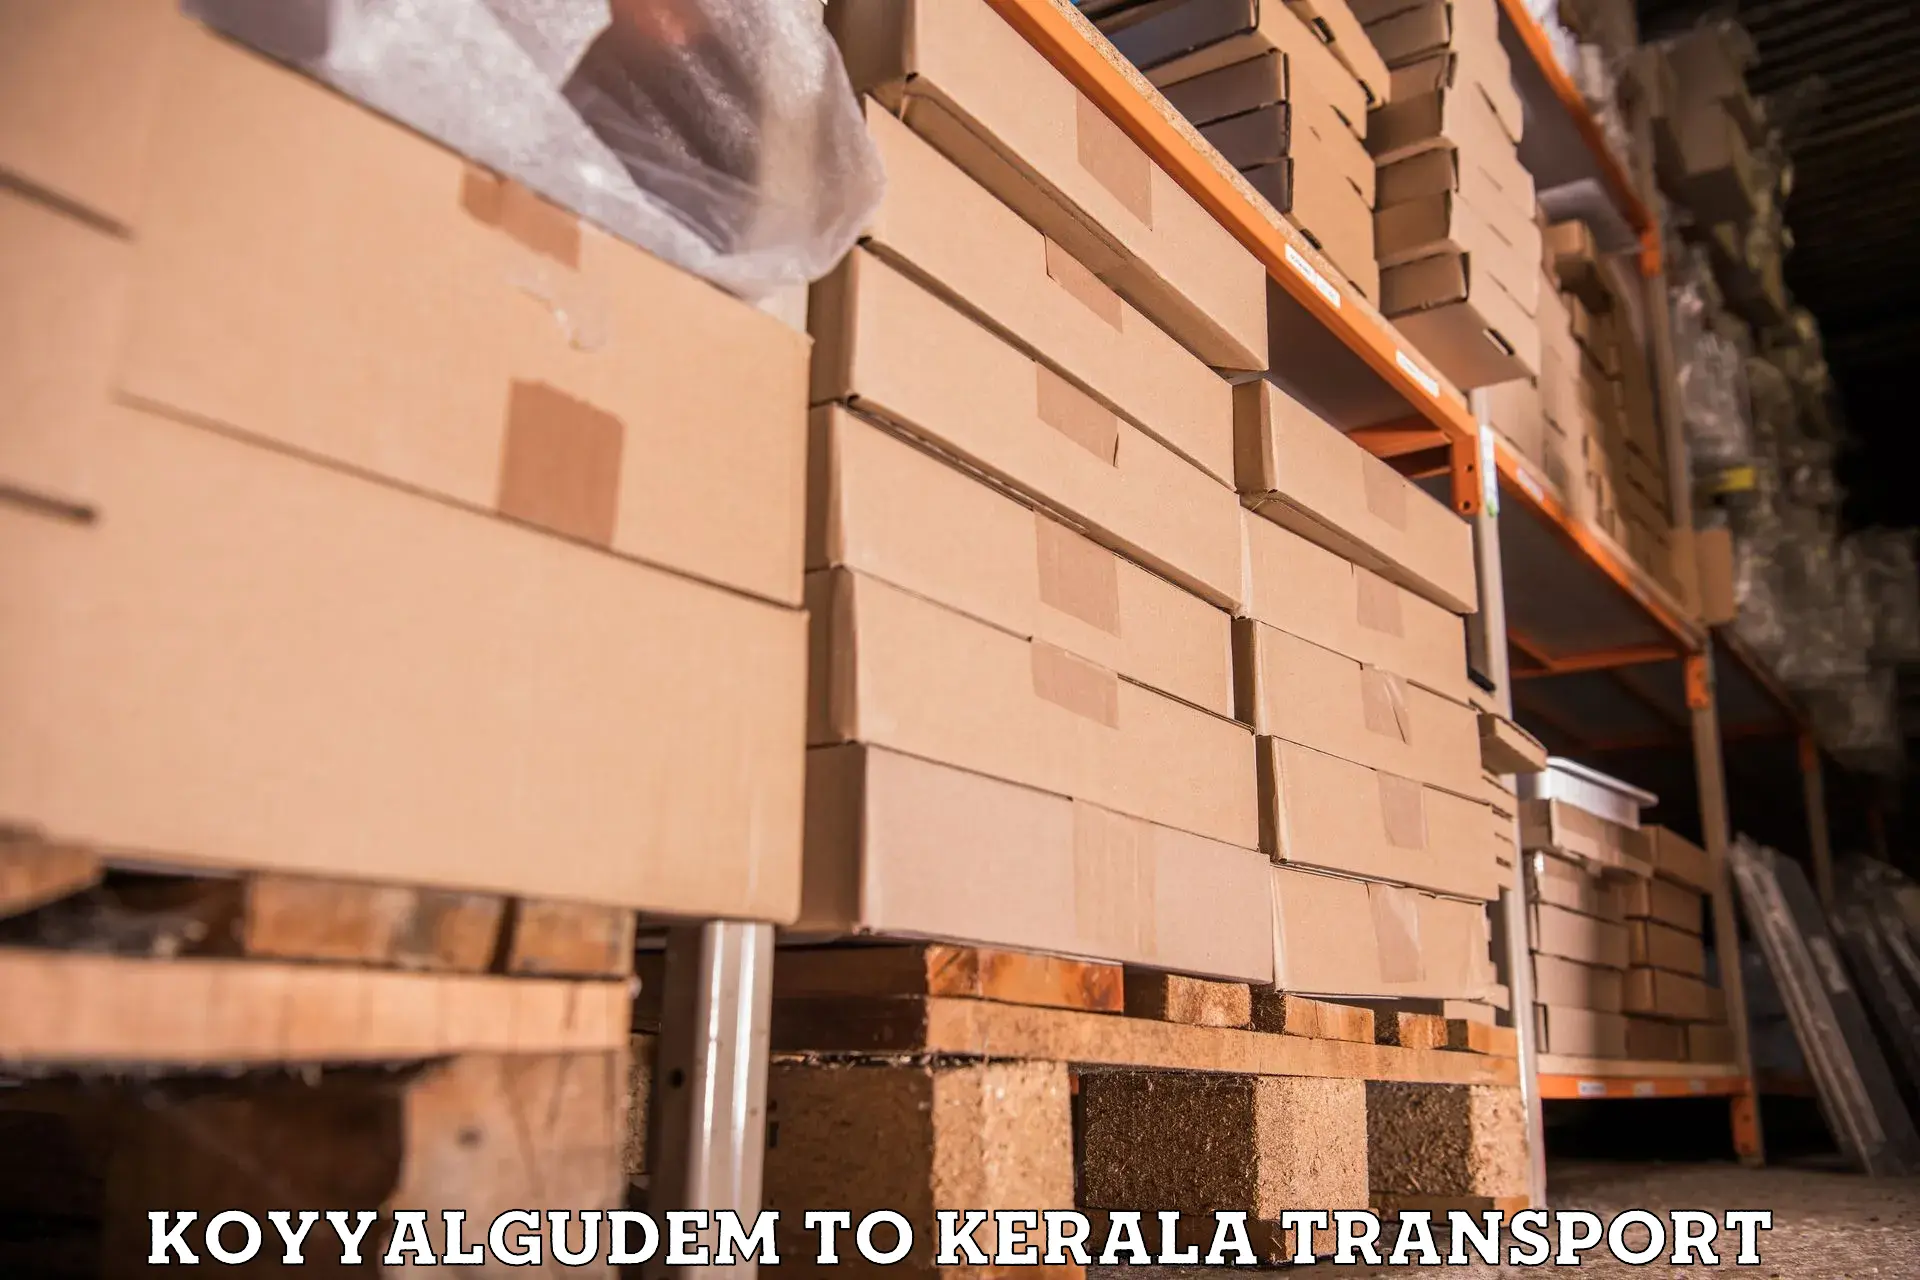 Transport in sharing in Koyyalgudem to Kattappana